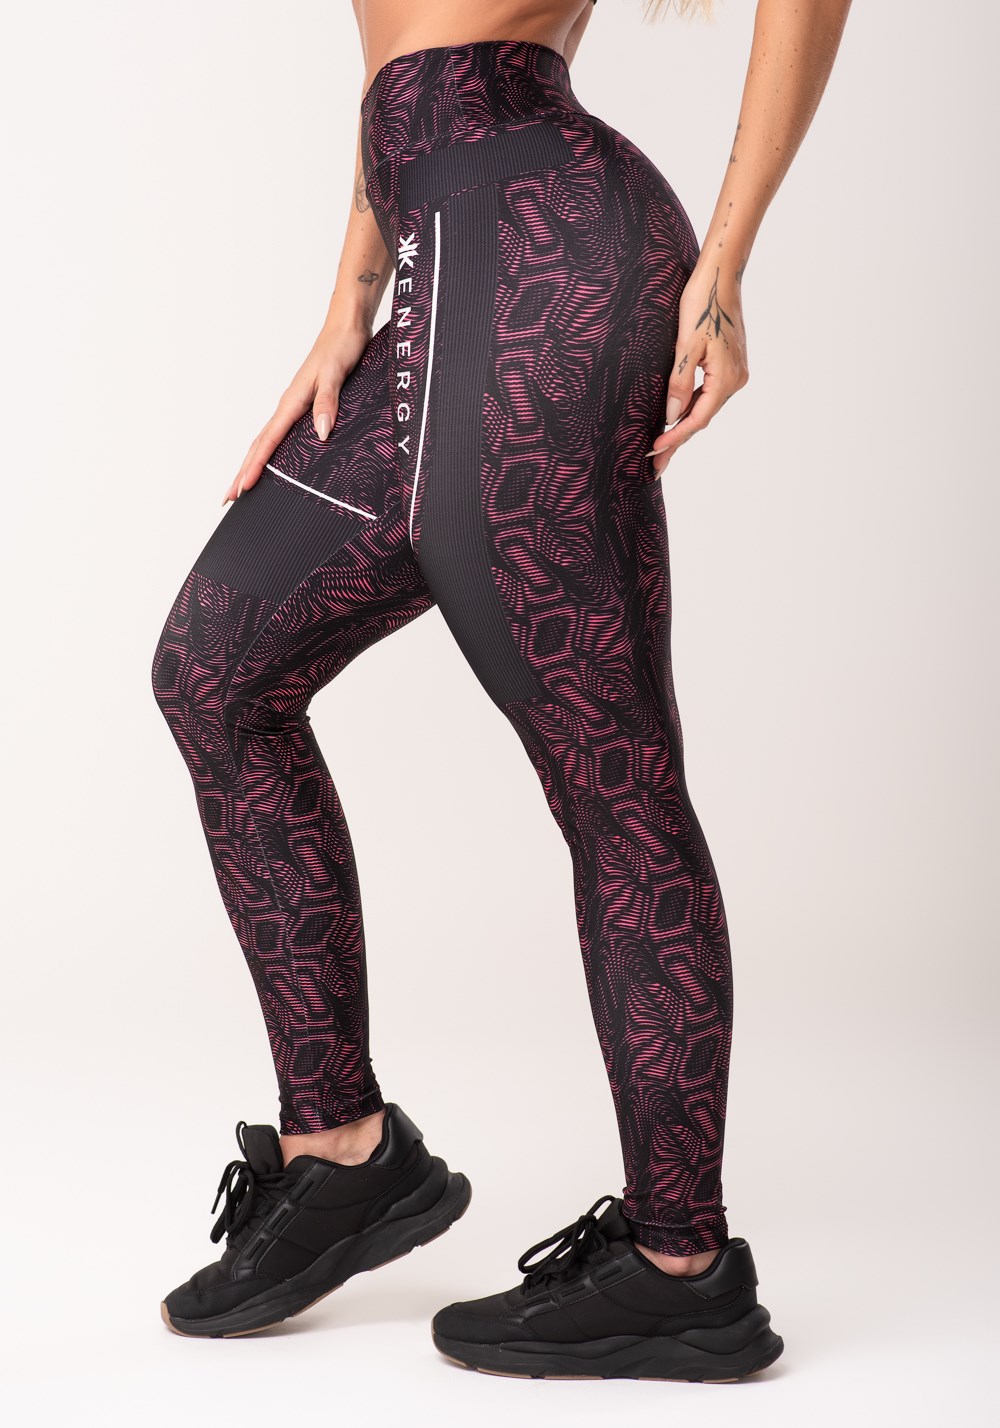 Legging fitness feminina new printed estampada mix zebra onça rosa